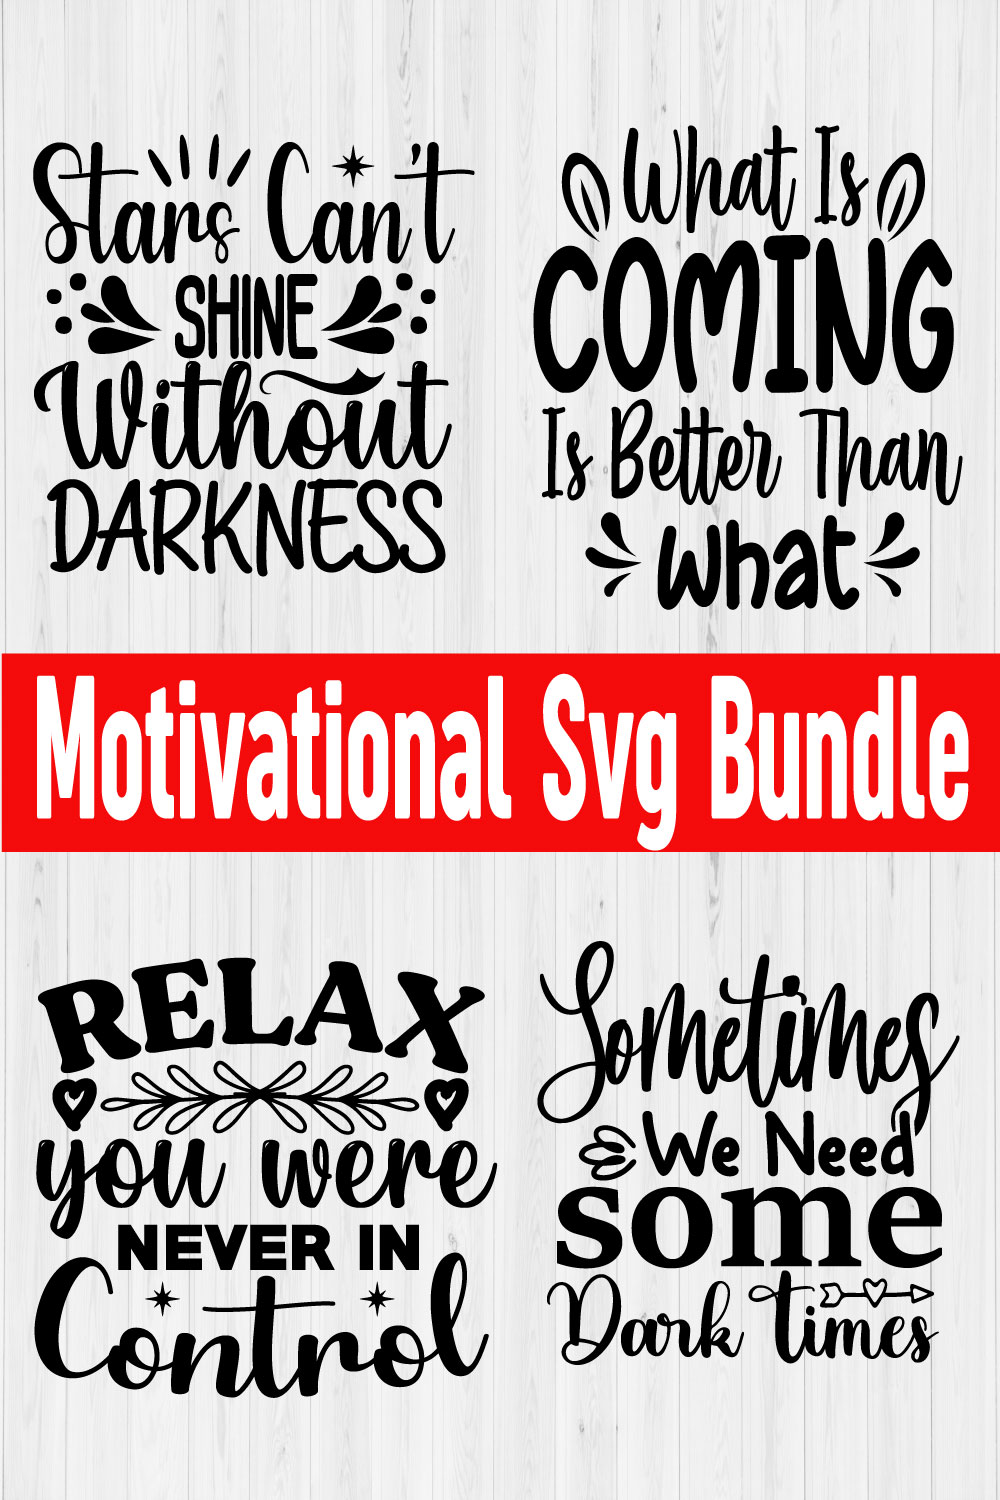 Motivational Svg Typography Design Vol5 pinterest preview image.